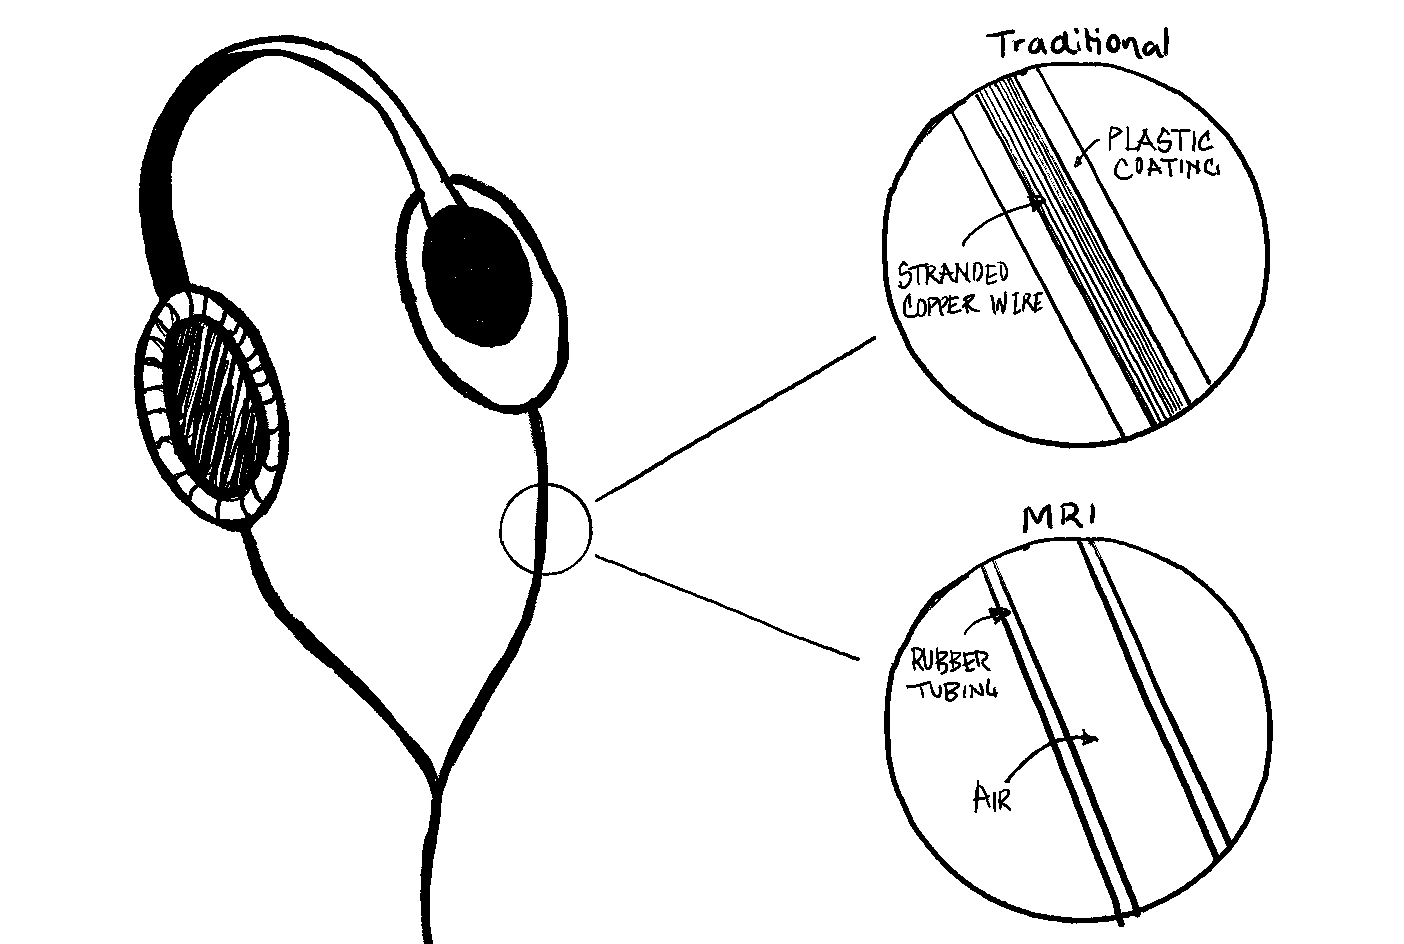 MRI Headphones vs. Traditional